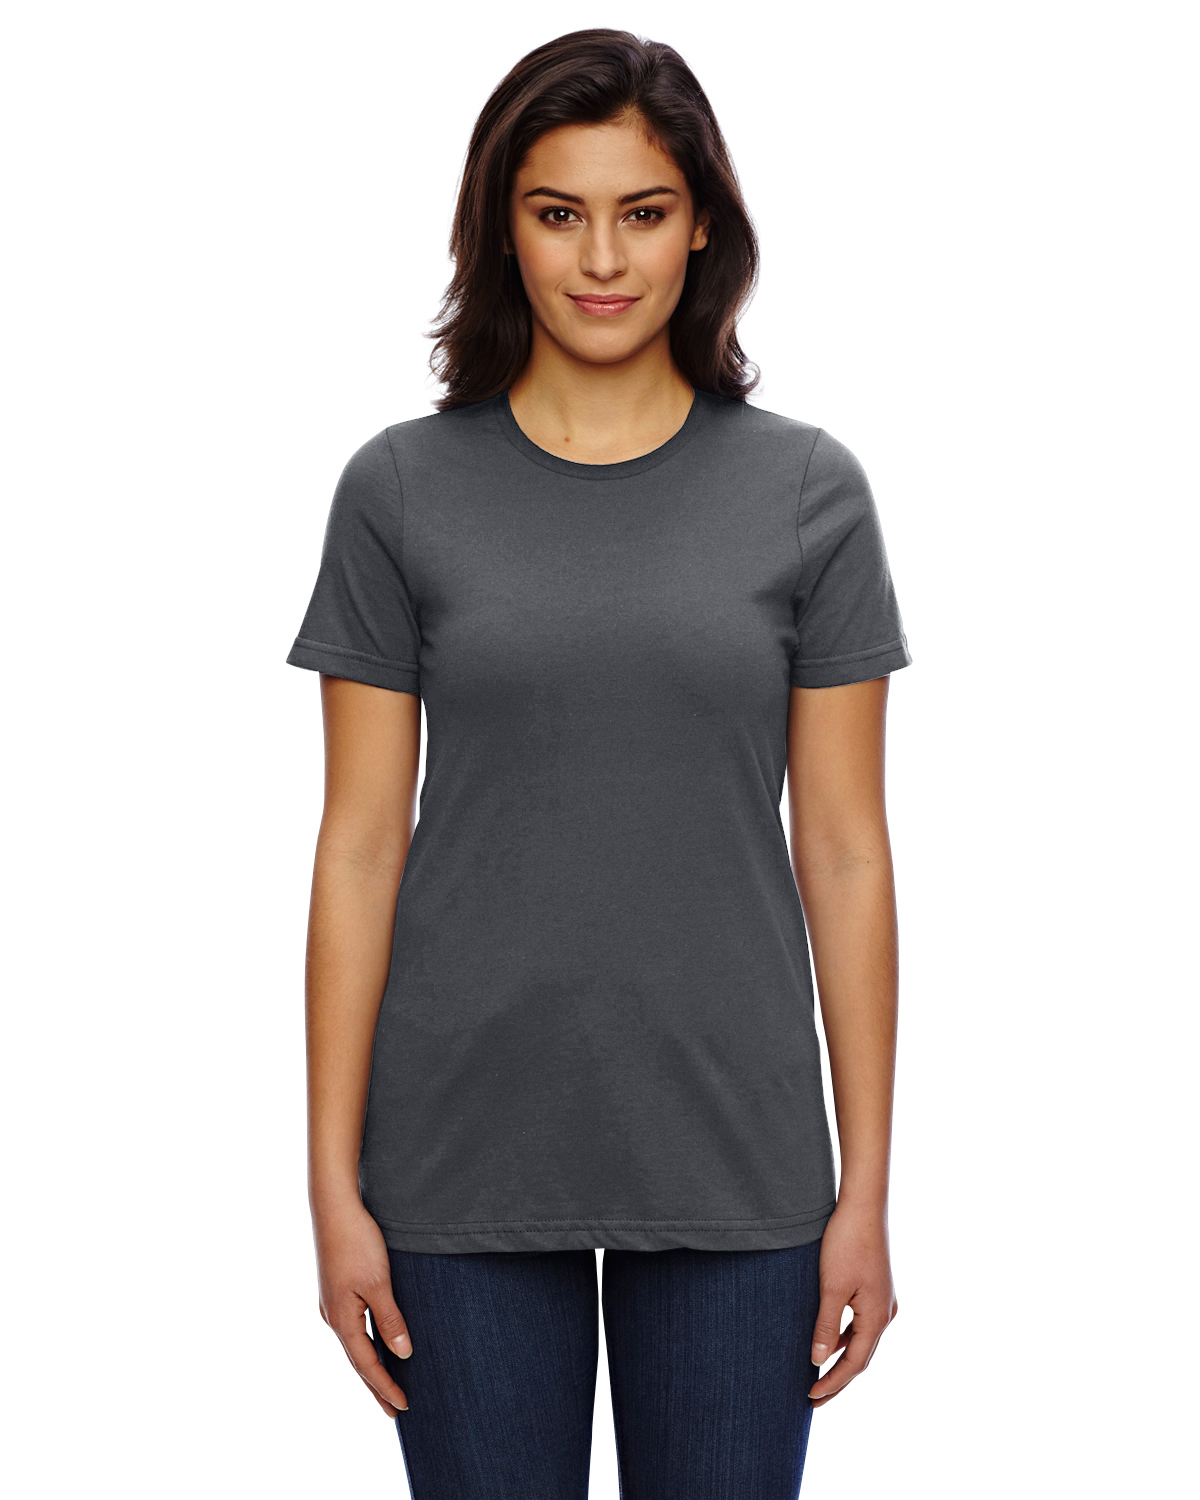 American Apparel 23215 - Ladies' Classic Women s T-Shirt - Friendly